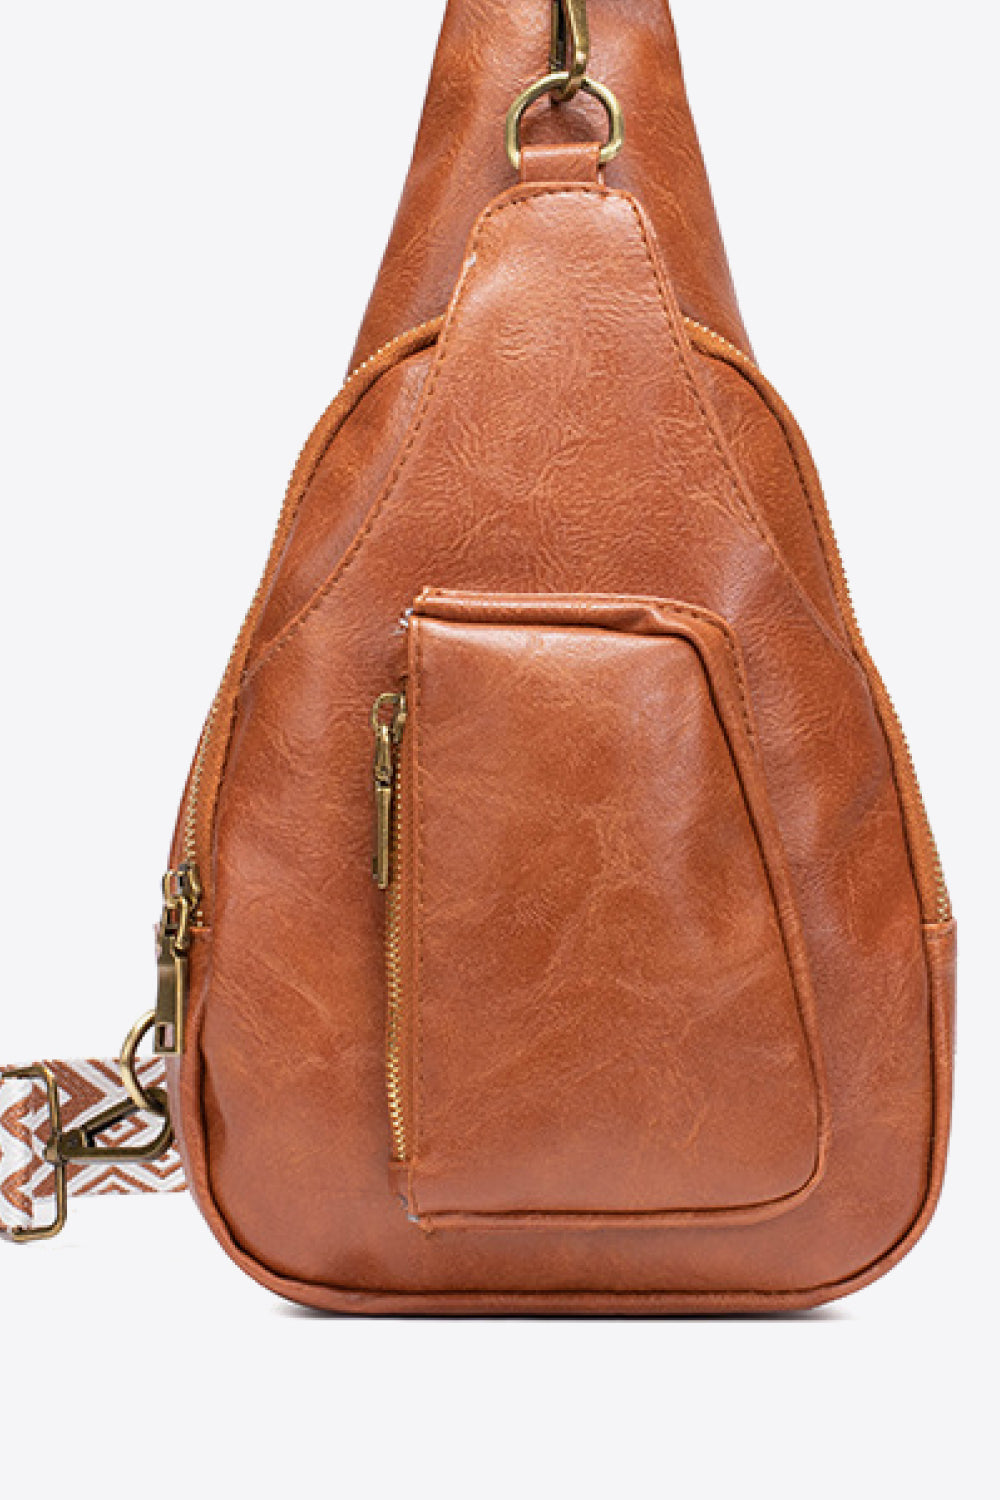 That Girl Vegan Leather Sling Bag